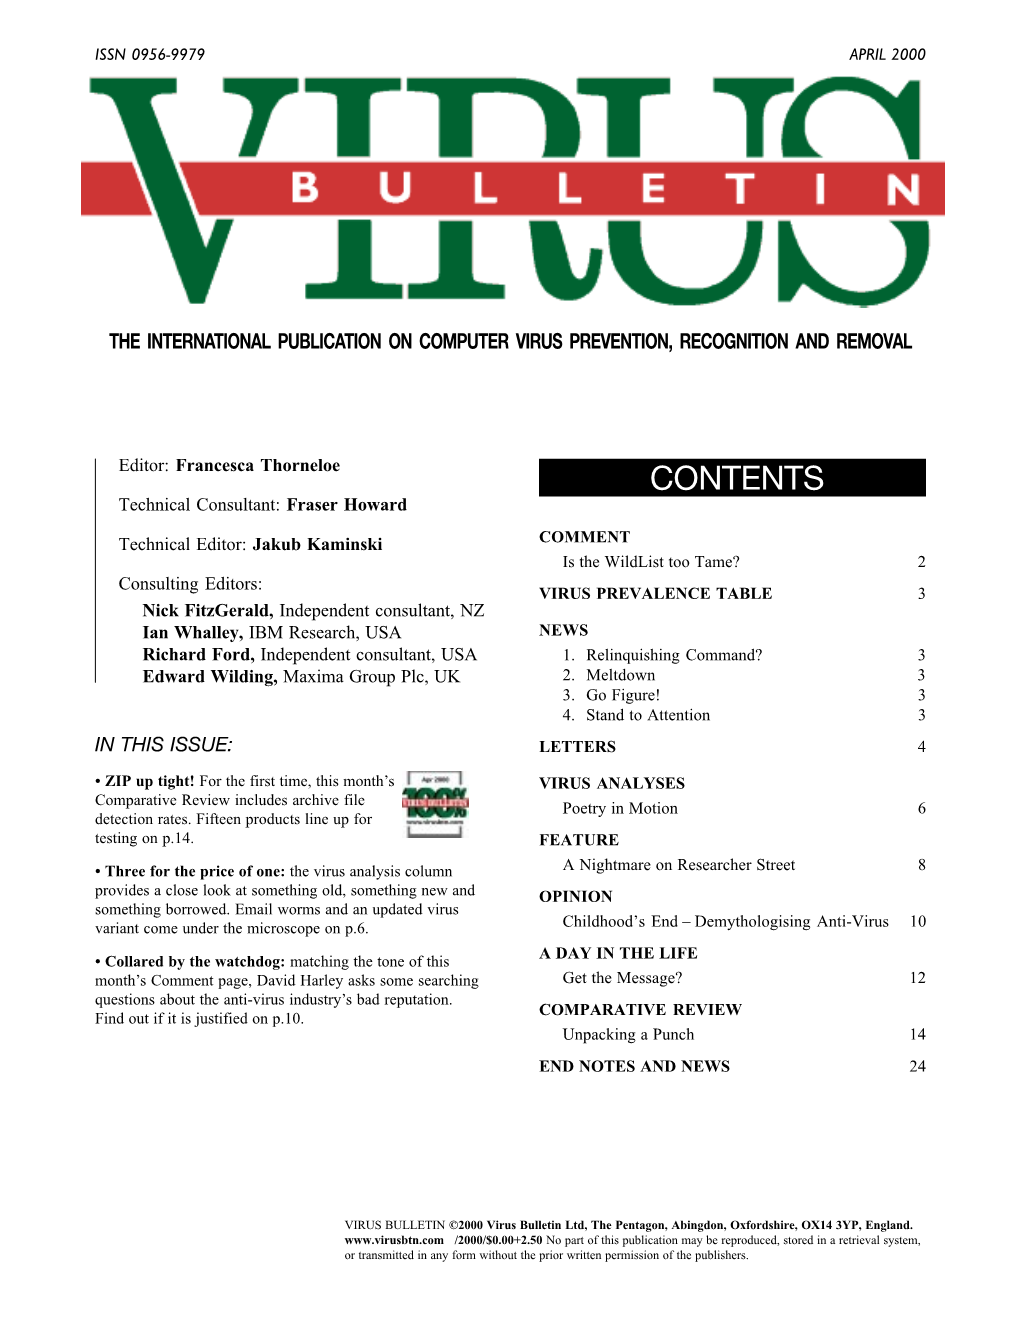 Virus Bulletin, April 2000